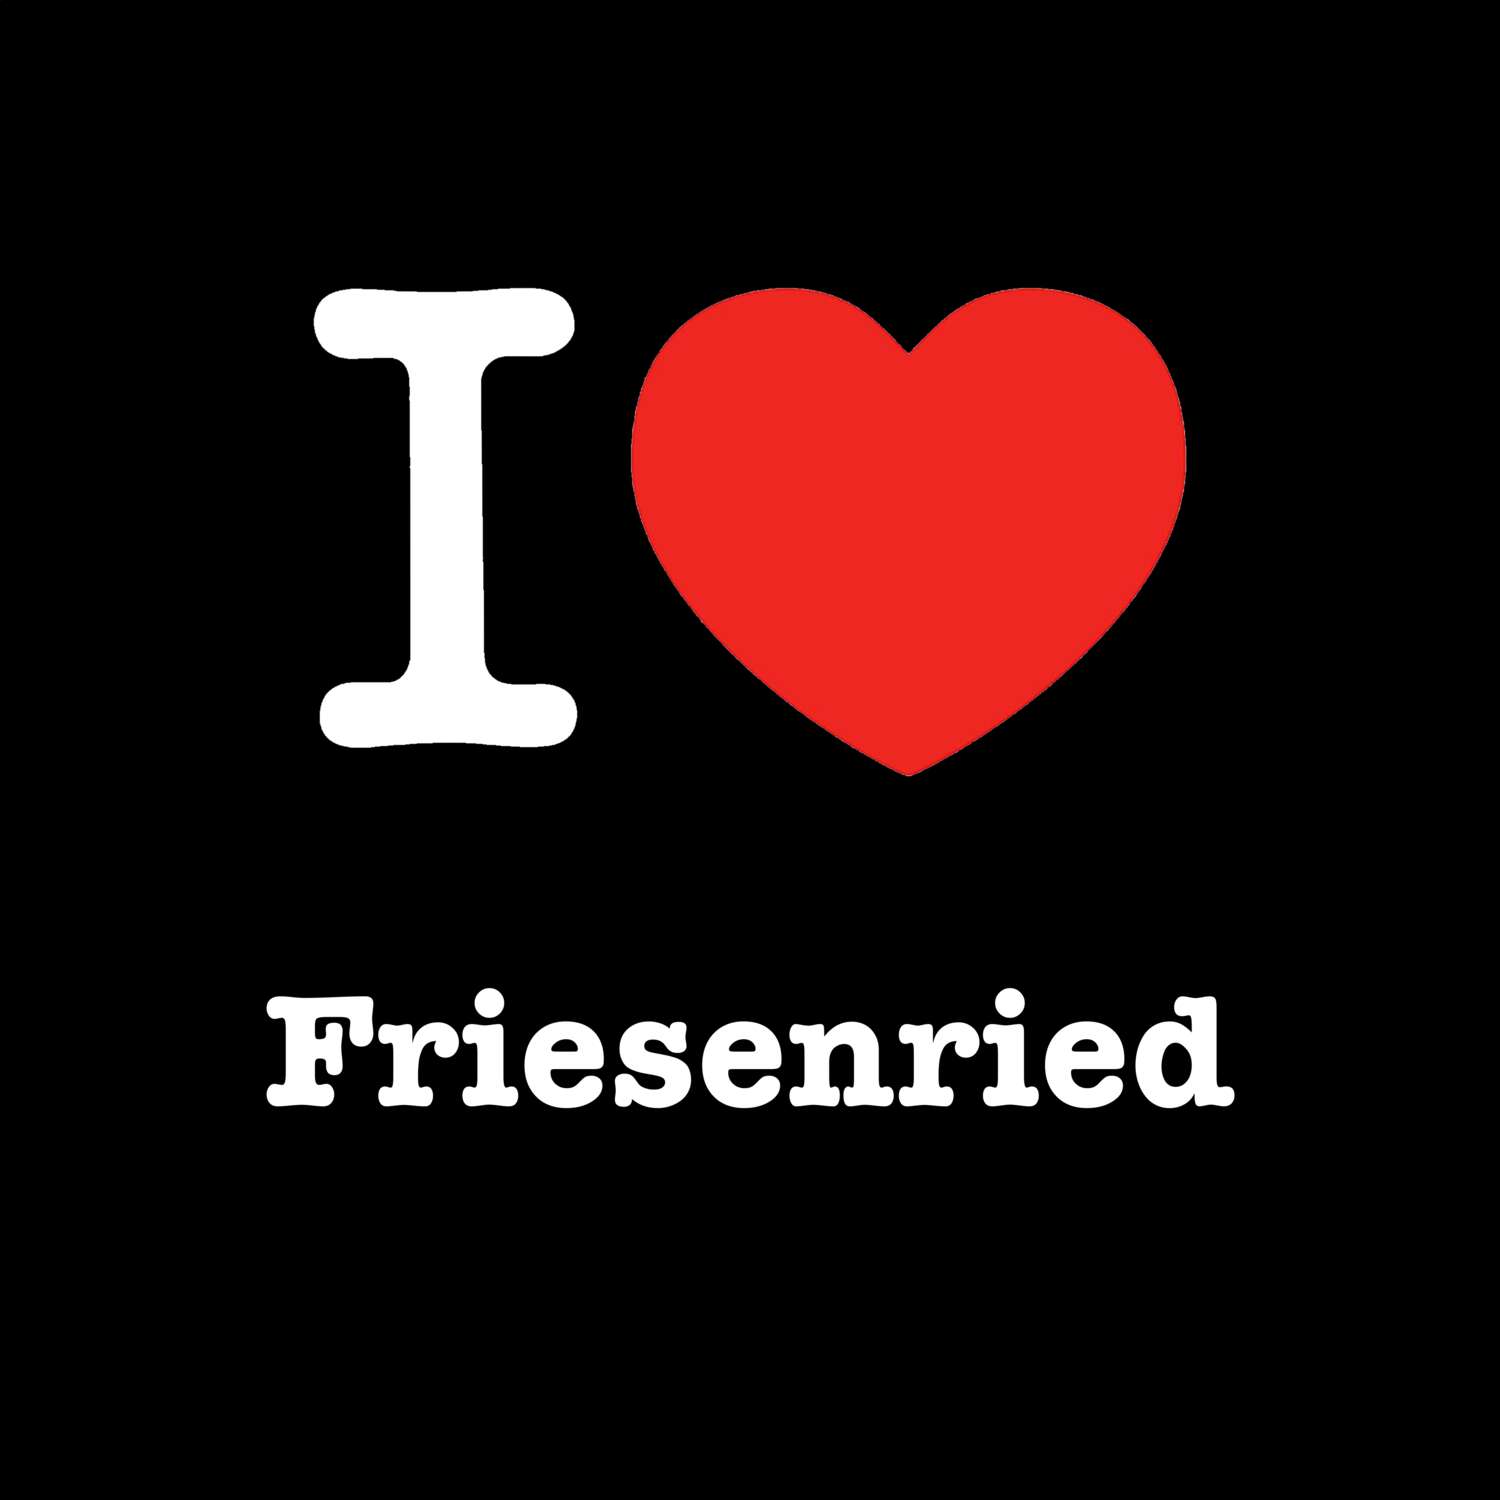 Friesenried T-Shirt »I love«